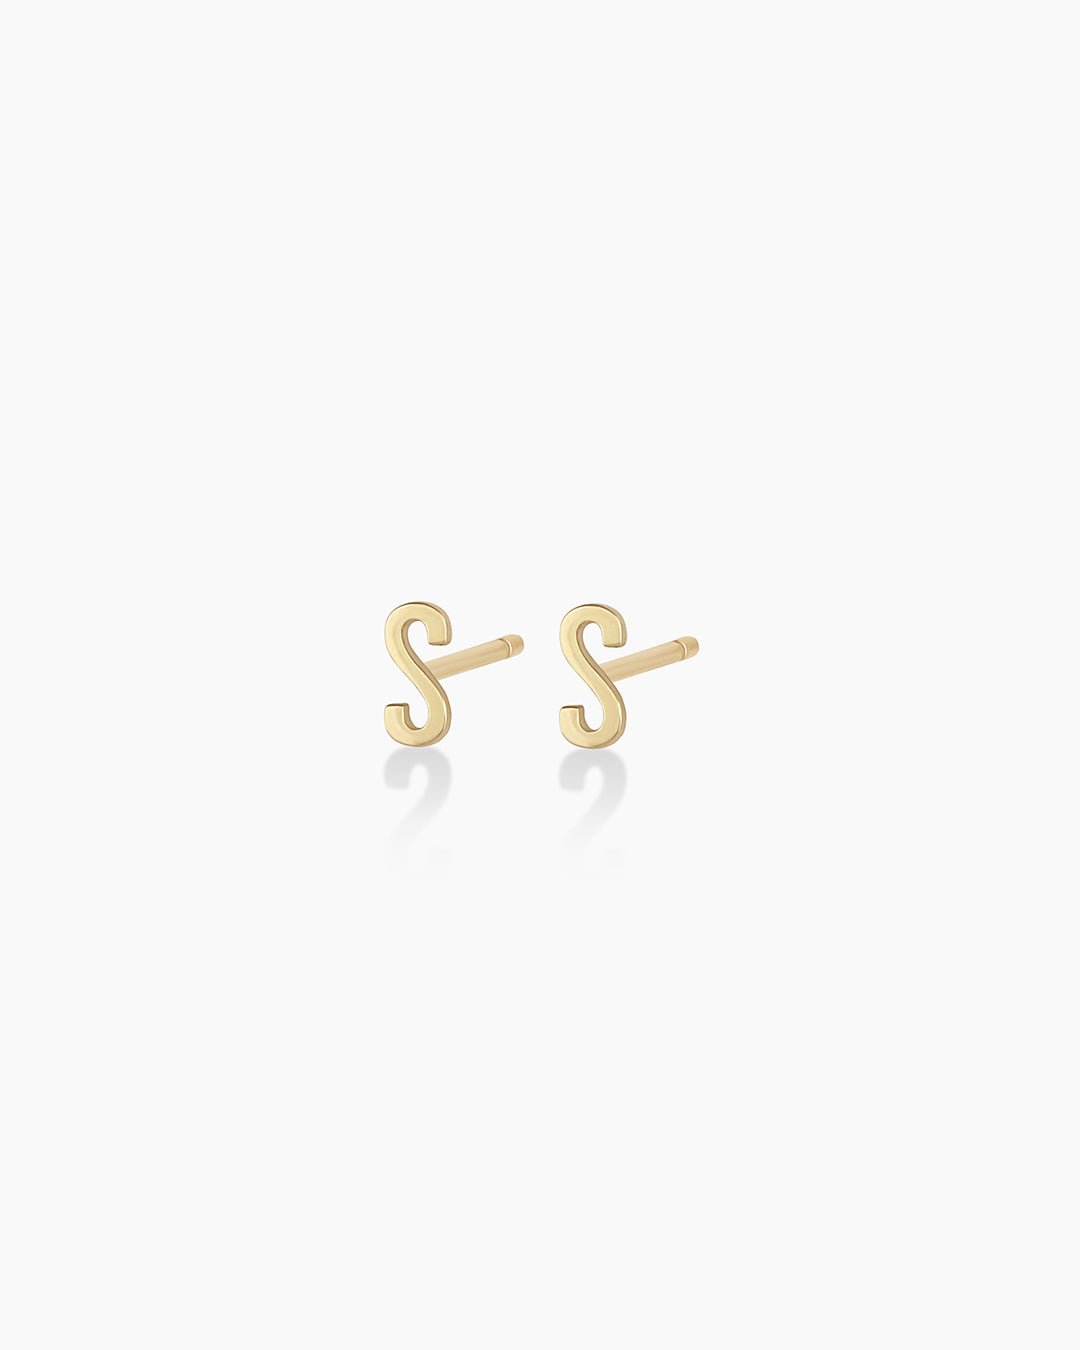 Alphabet earring stud || option::14k Solid Gold, S, Pair